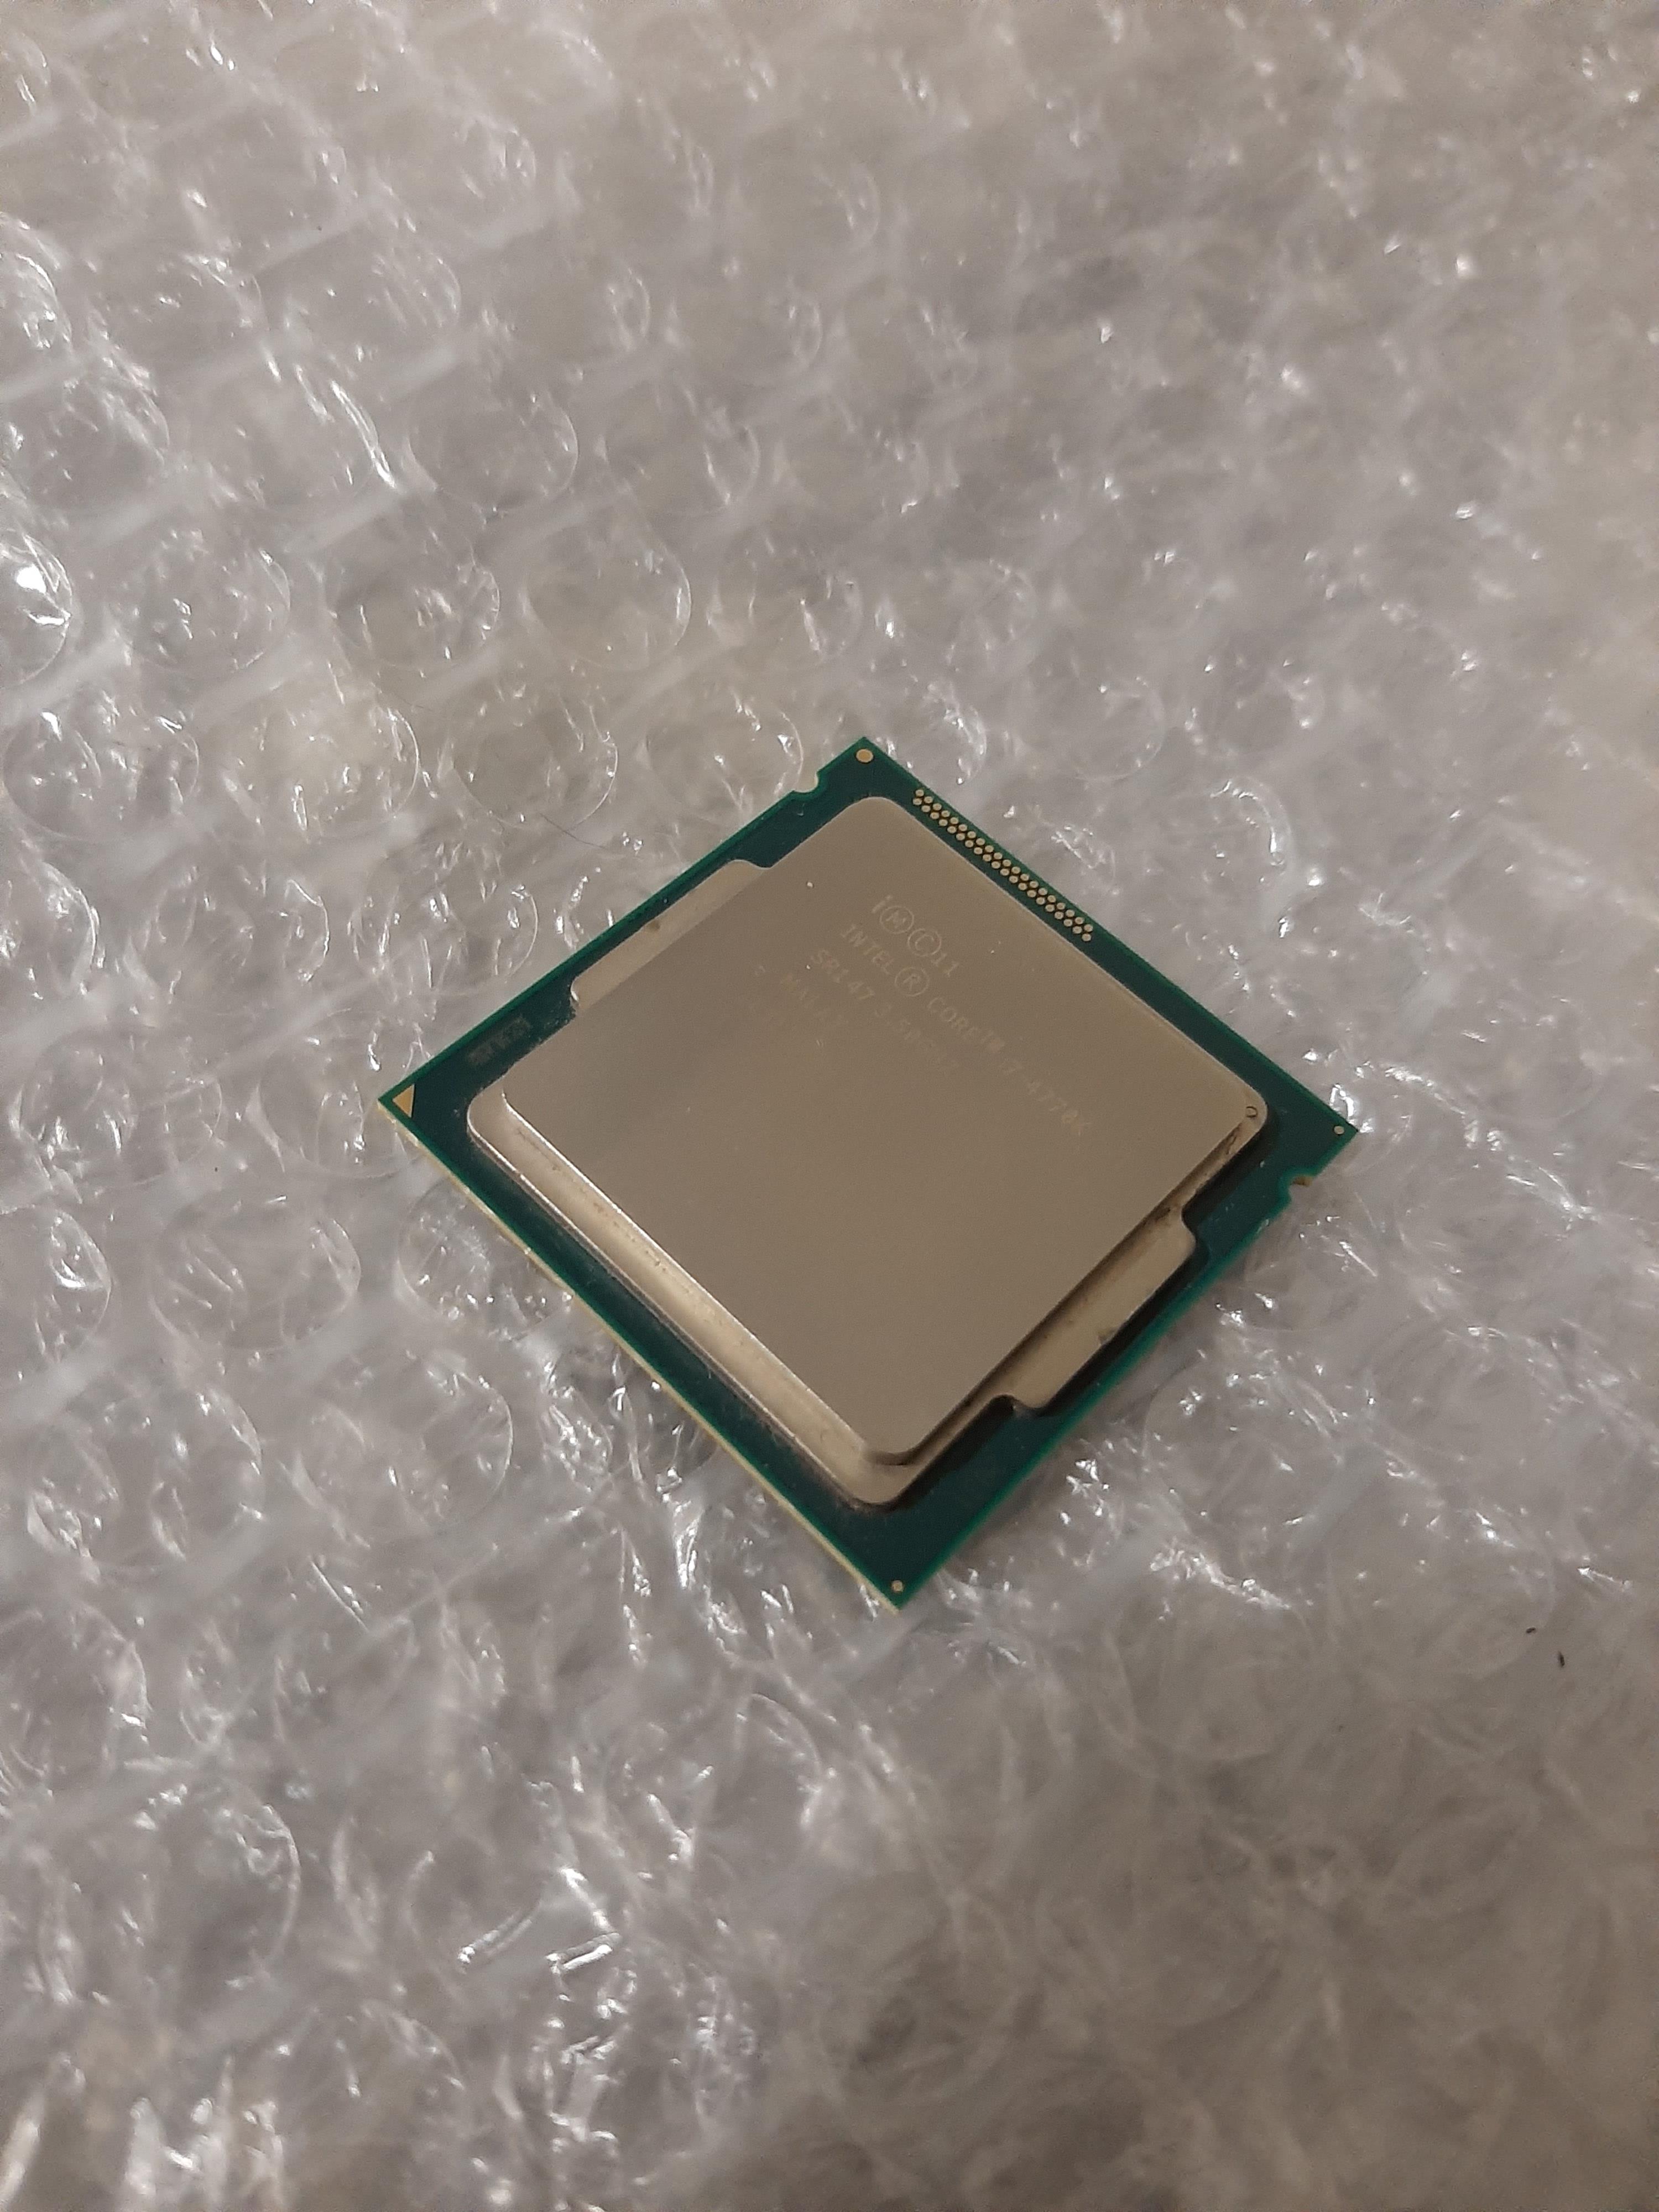 Intel Core i7 4770K Soket 1150 3.5GHz 8MB Cache 22nm İşlemci | DonanımHaber  Forum